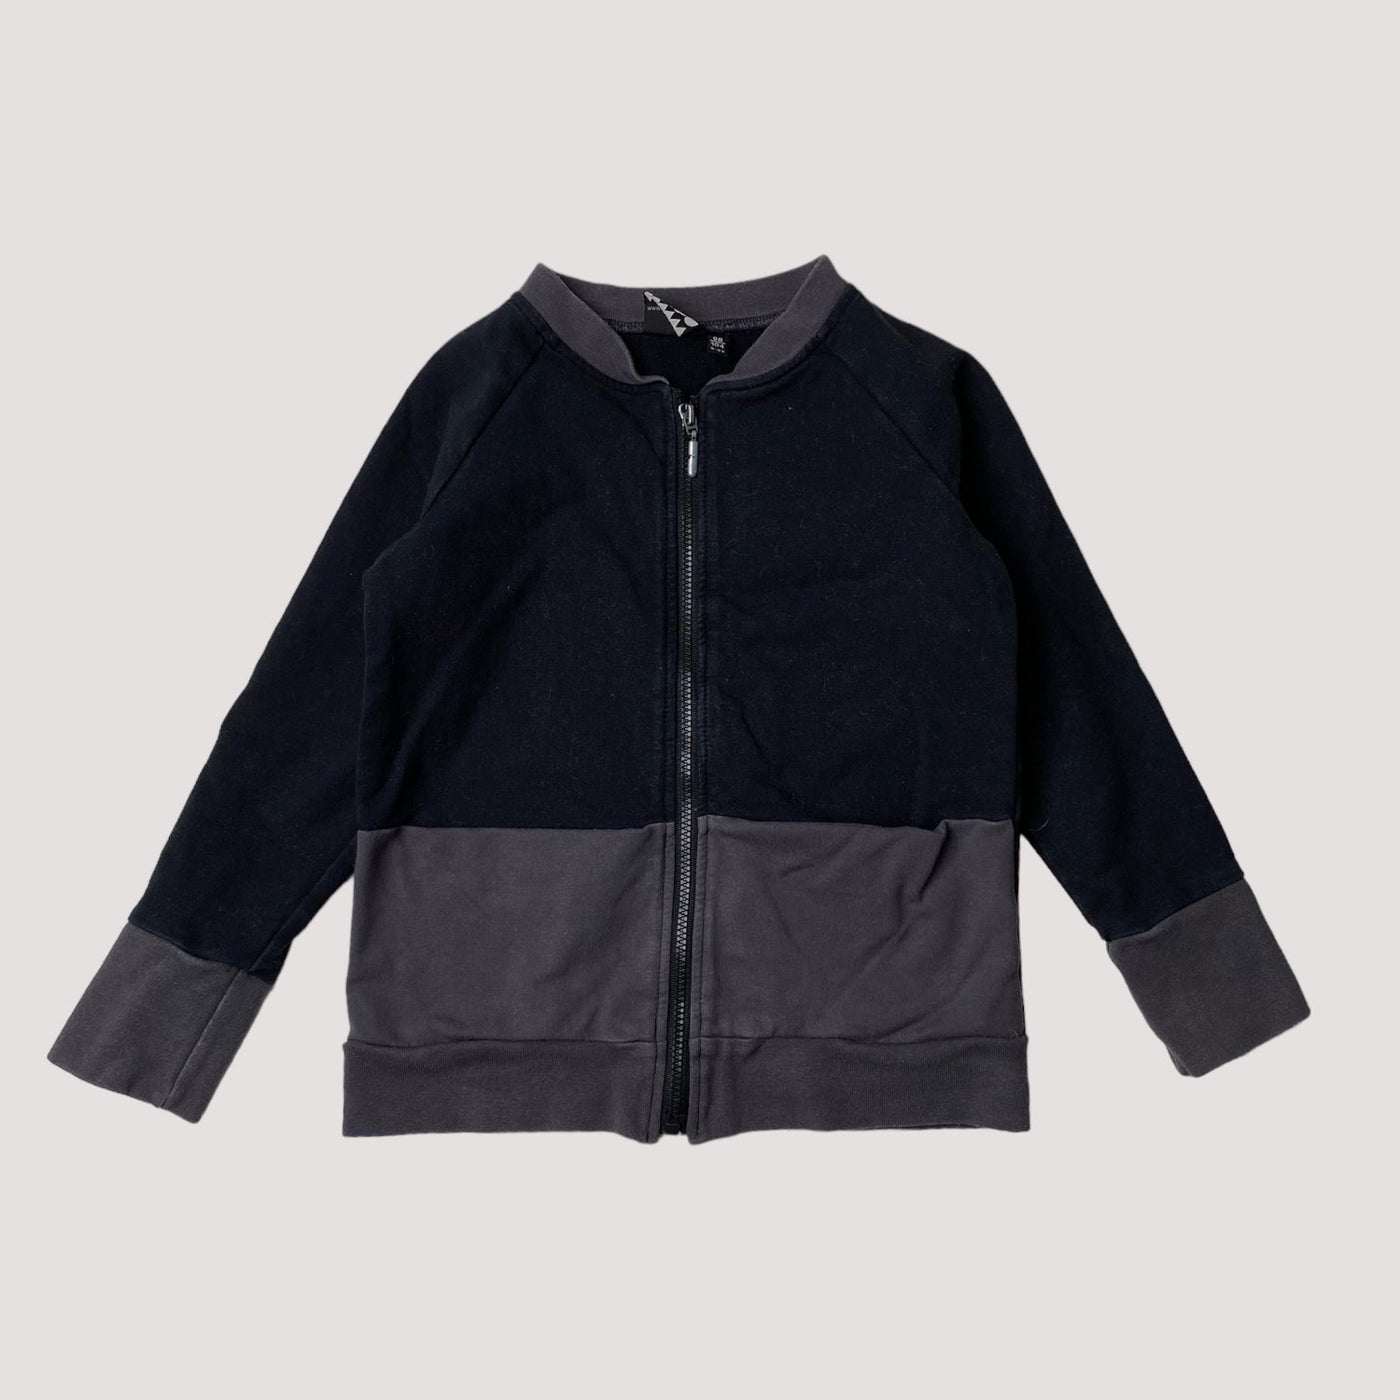 zipper sweat jacket, black/taupe grey | 98/104cm